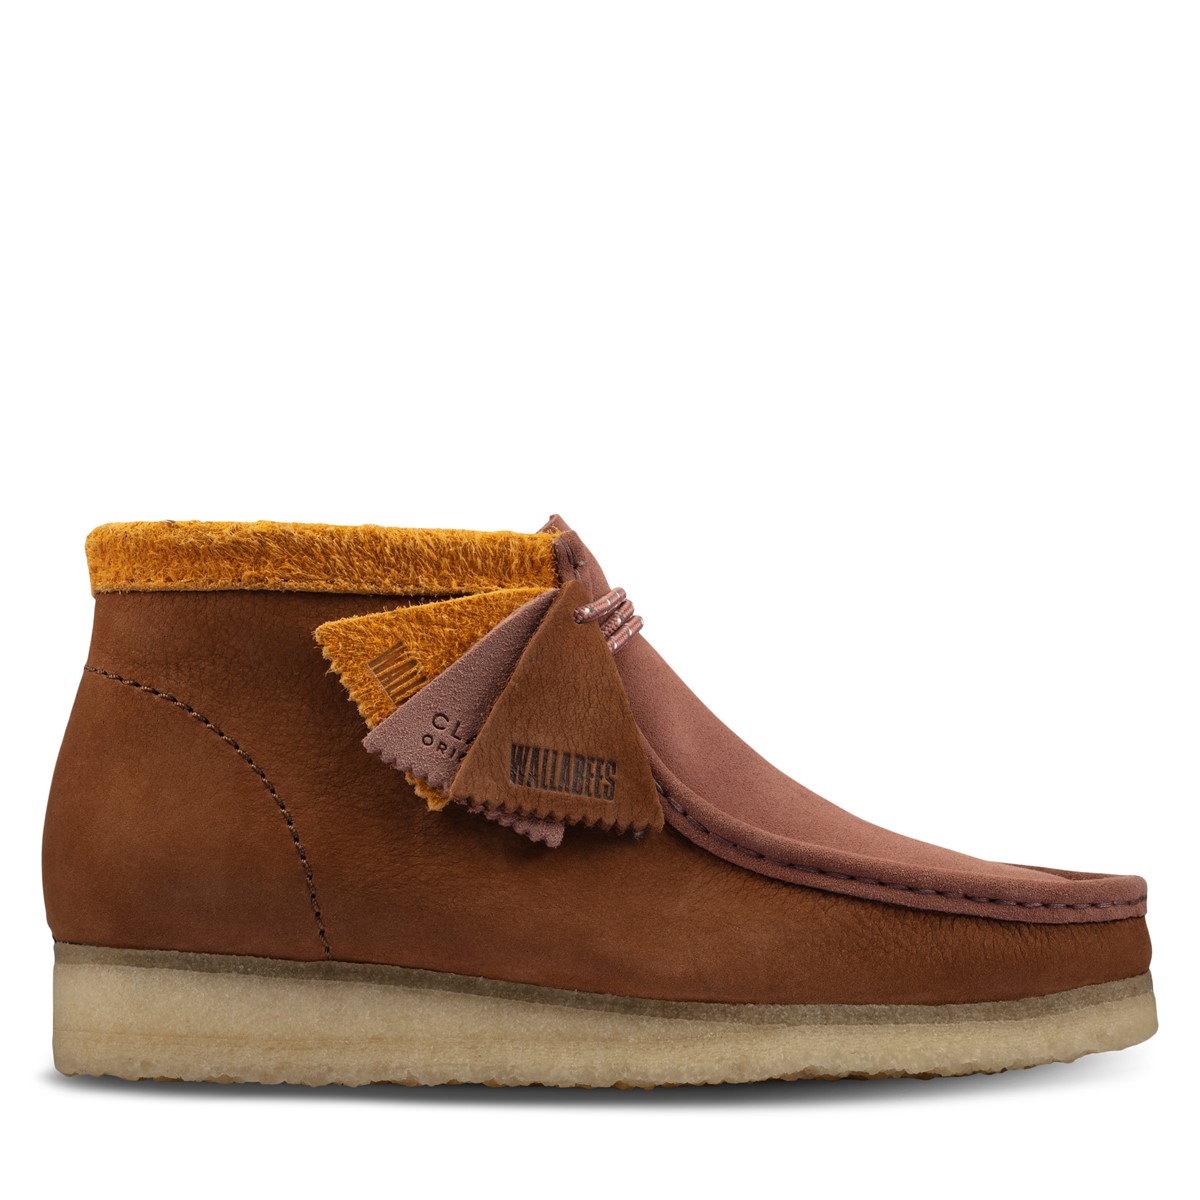 Men's Wallabee Boots in Multicolour Brown